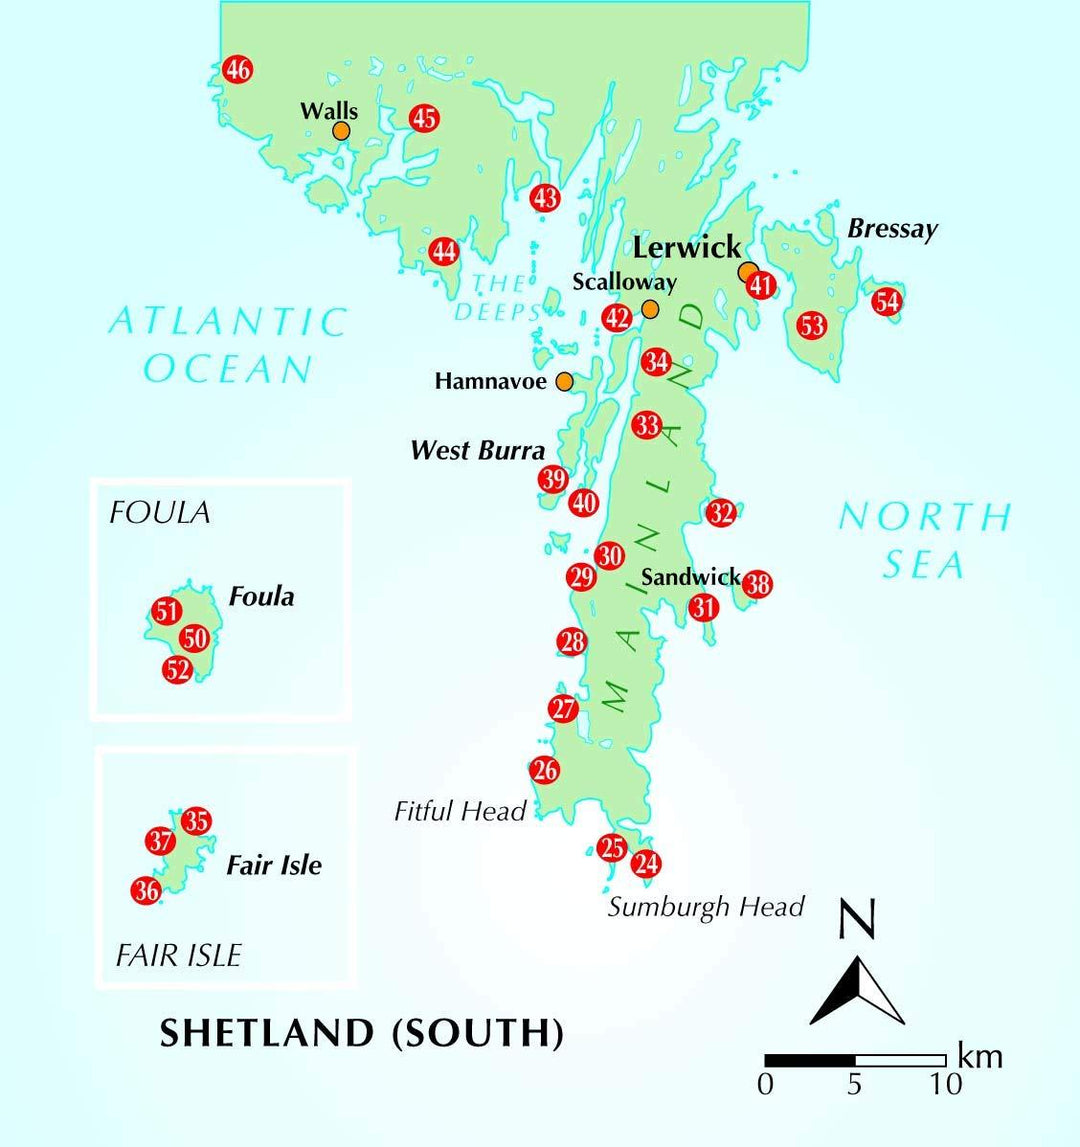 Guide de randonnées (en anglais) - Orkney & Shetland Isles walking guide : 80 walks | Cicerone guide de randonnée Cicerone 